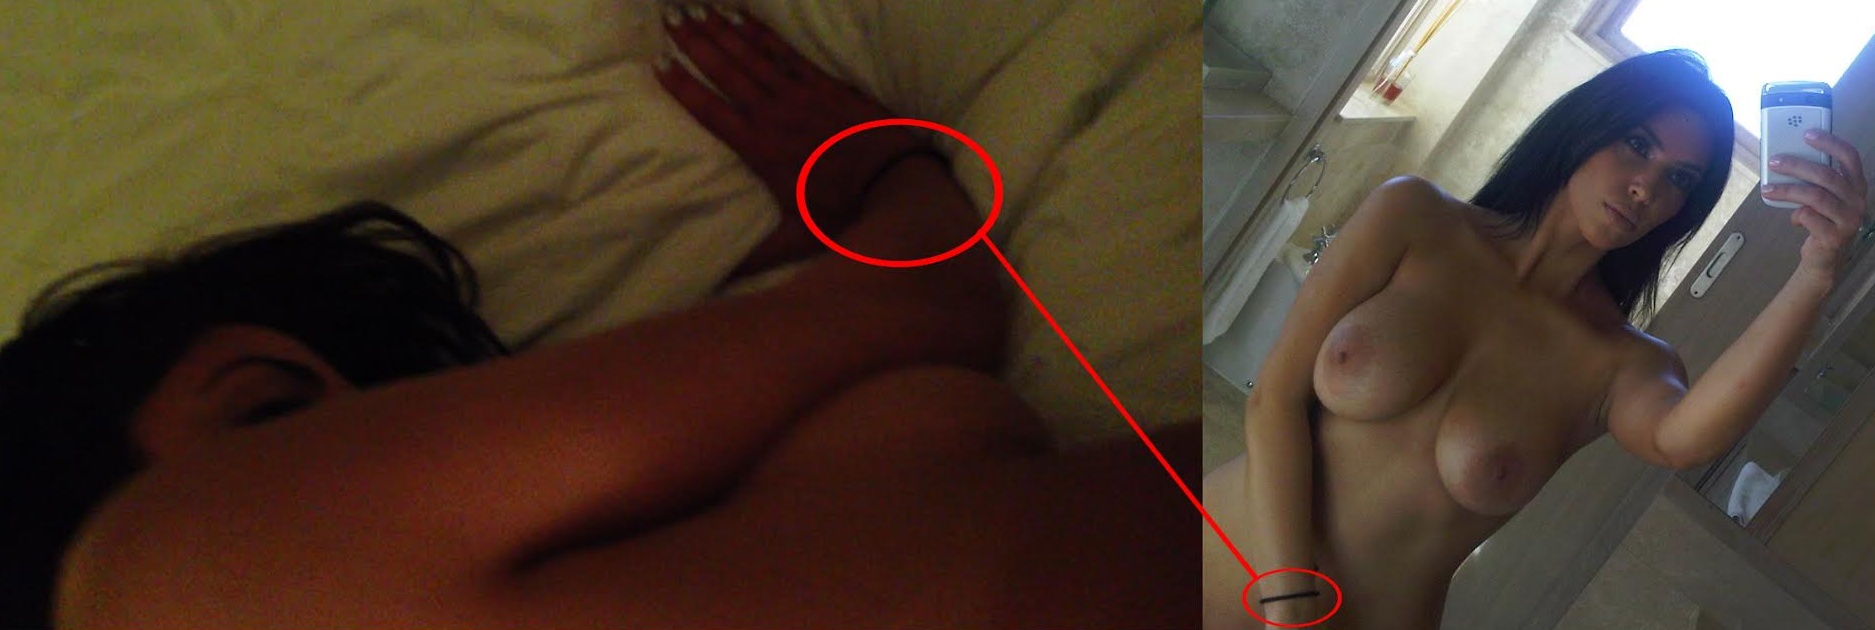 Kourtney kardashian nude photos leaked - 🧡 Kim Kardashian Naked Images ...